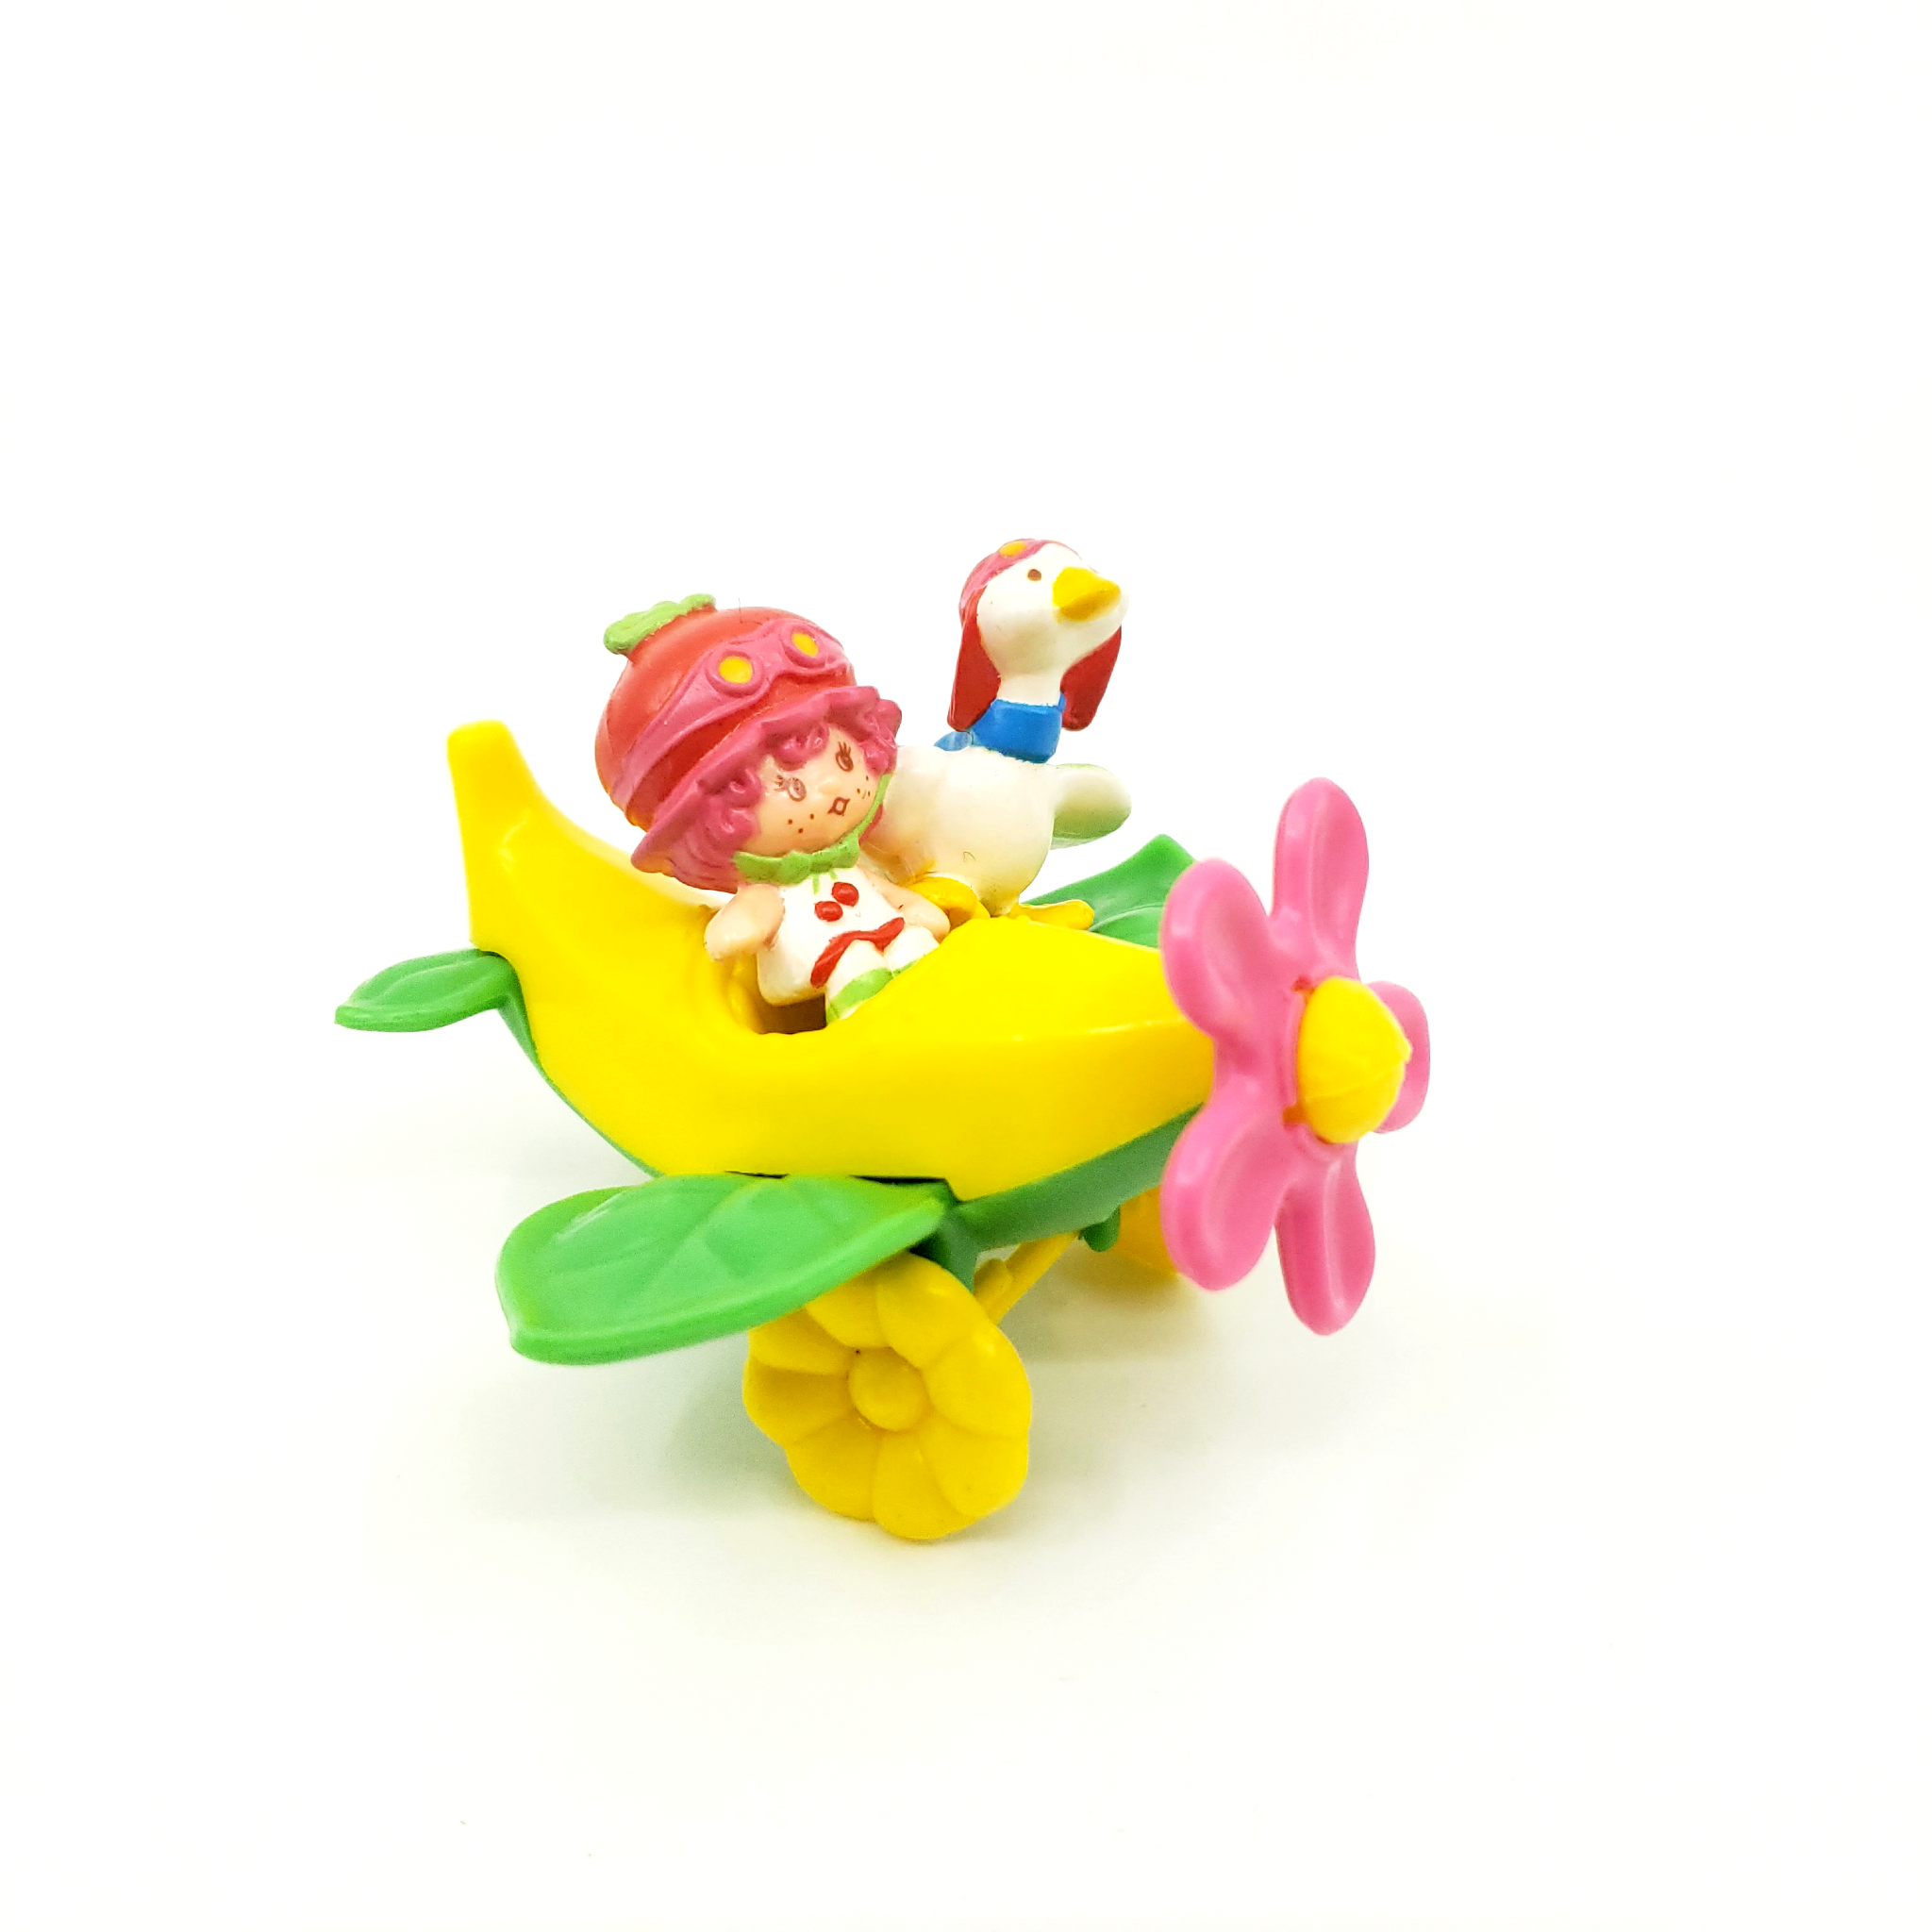 Vintage Miniature Cherry Cuddler Flying an Airplane